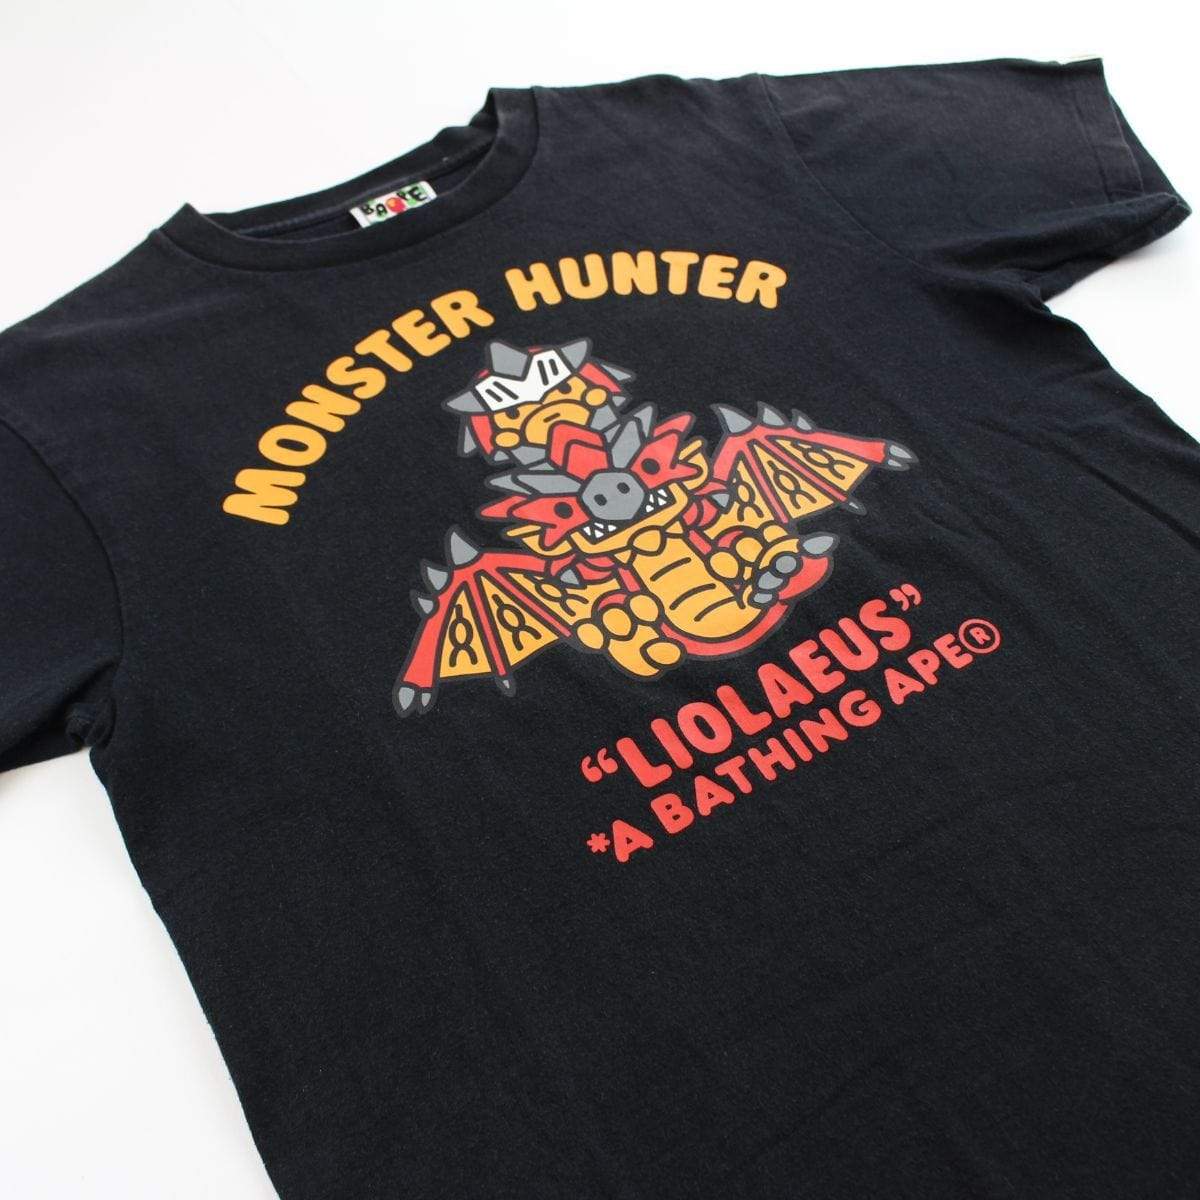 Bape x Monster Hunters Liolaeus Logo Tee black - SaruGeneral